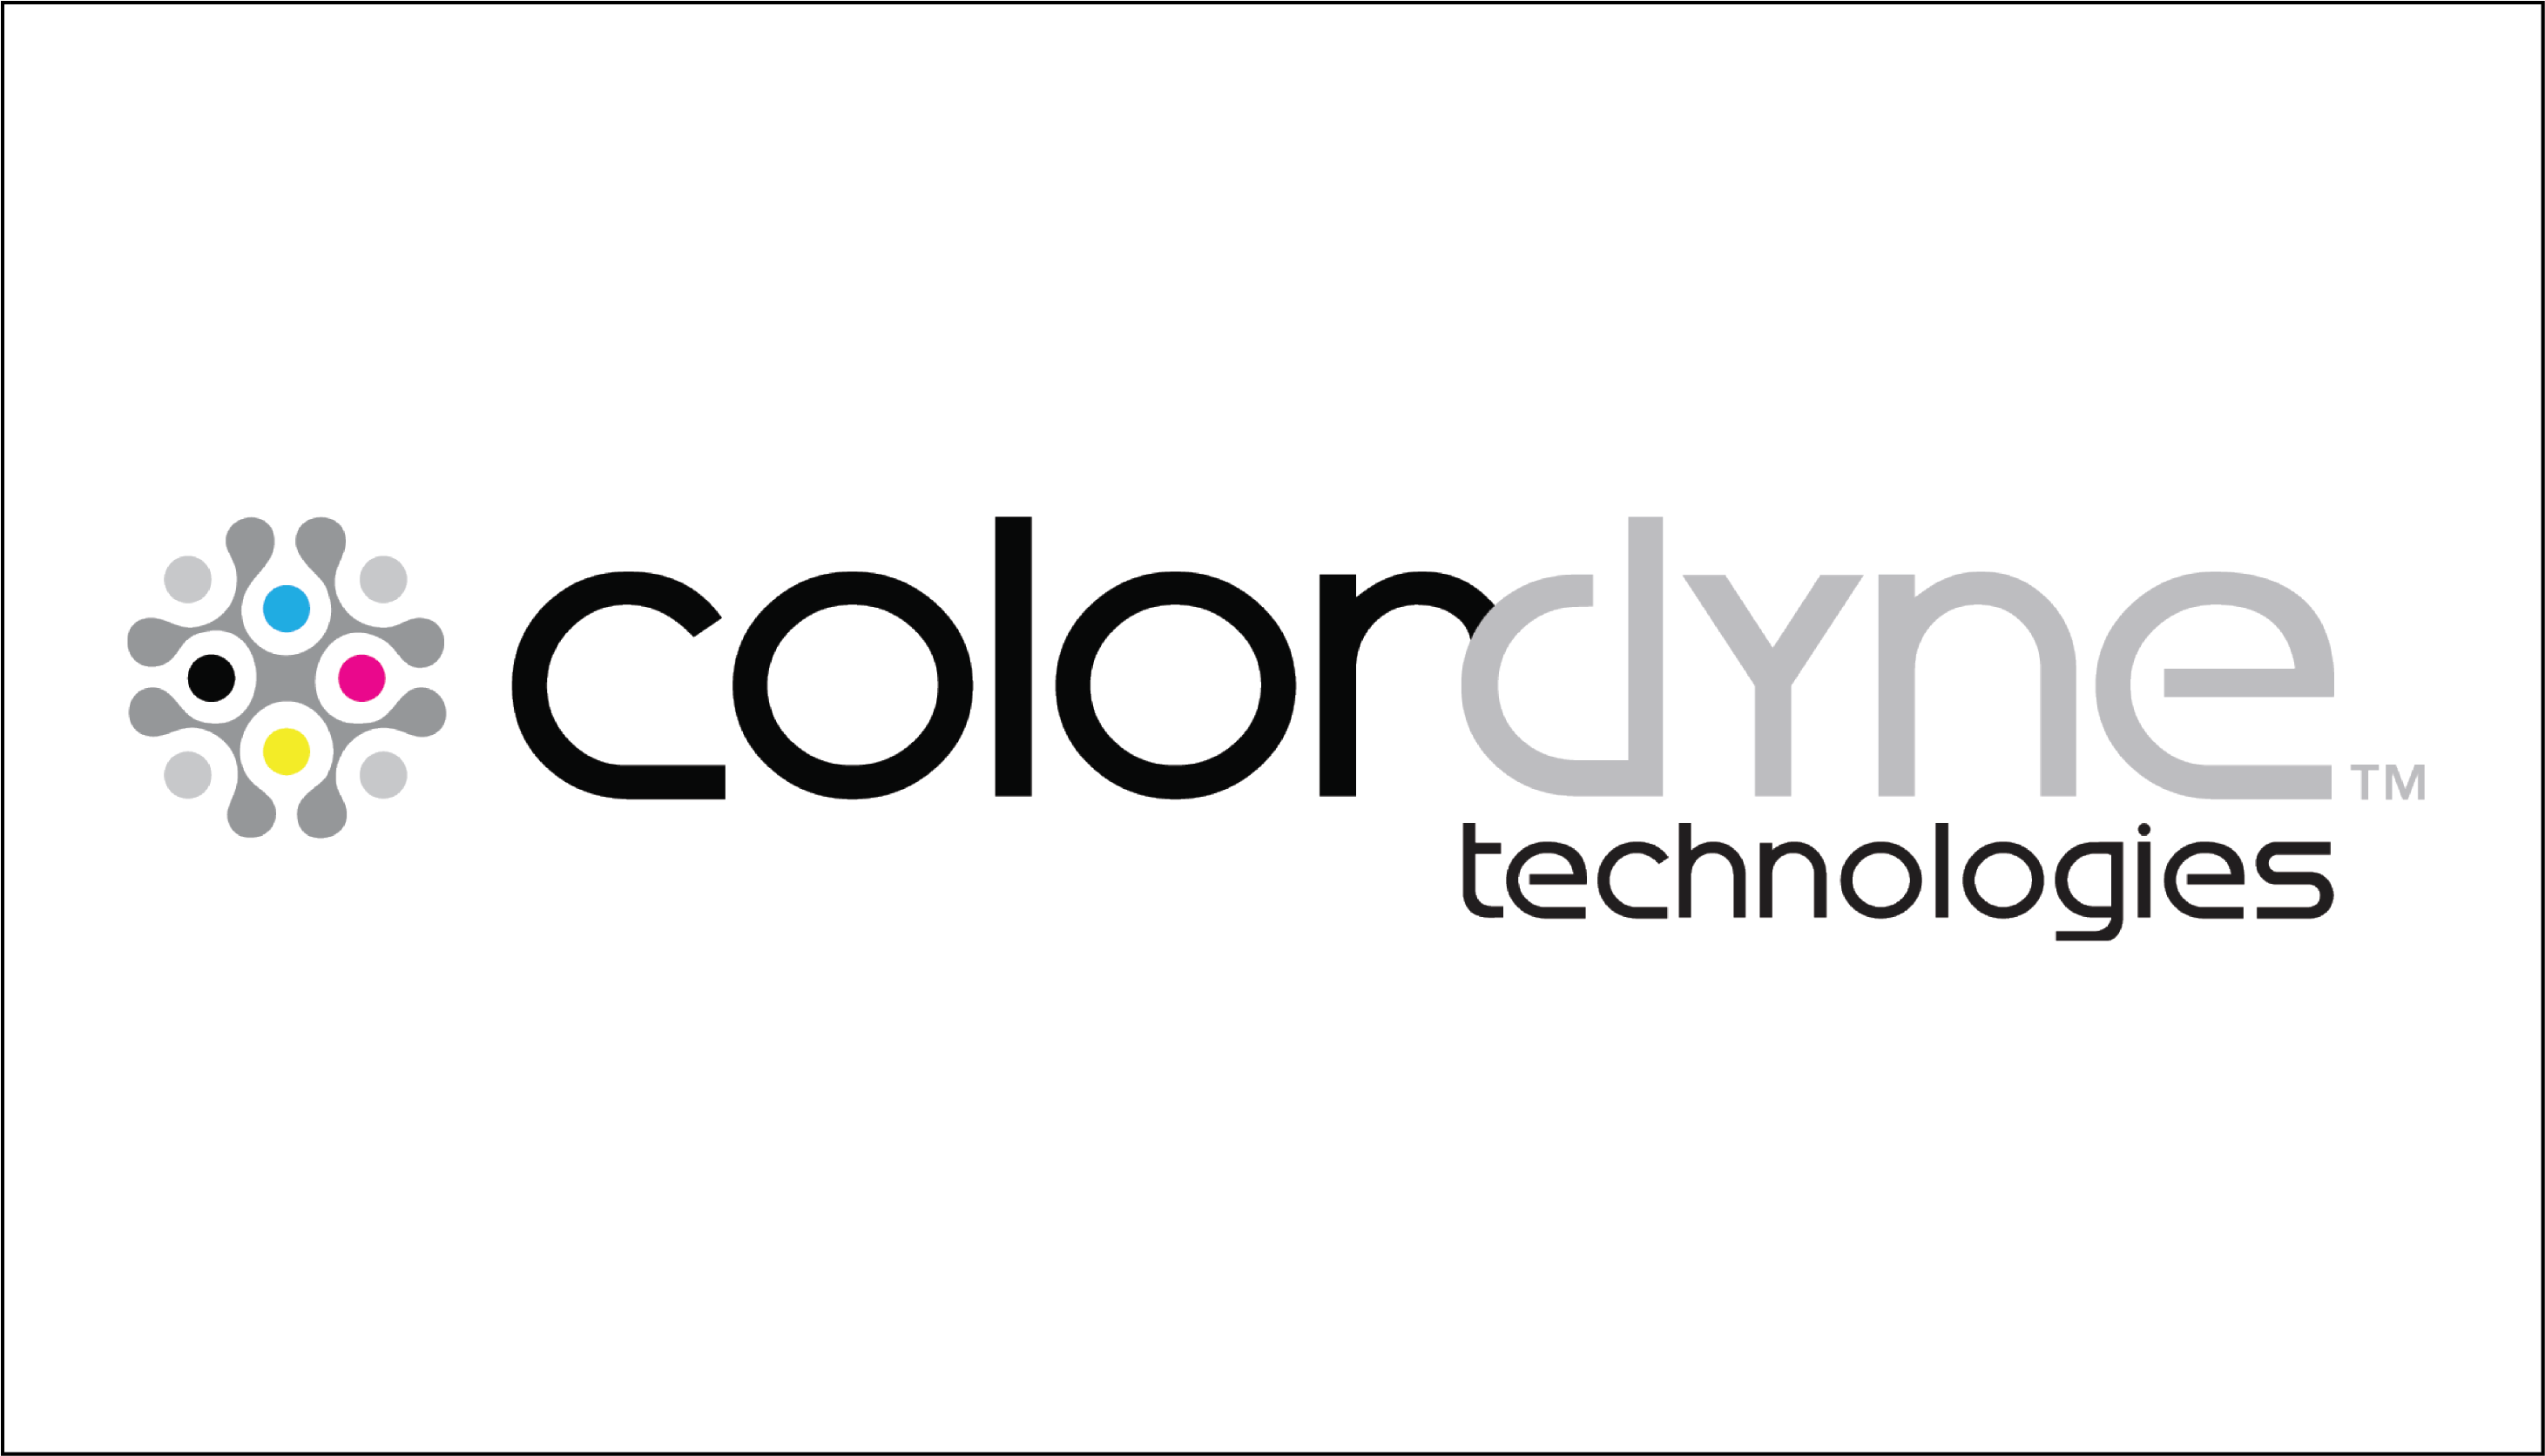 Colordyne Technologies